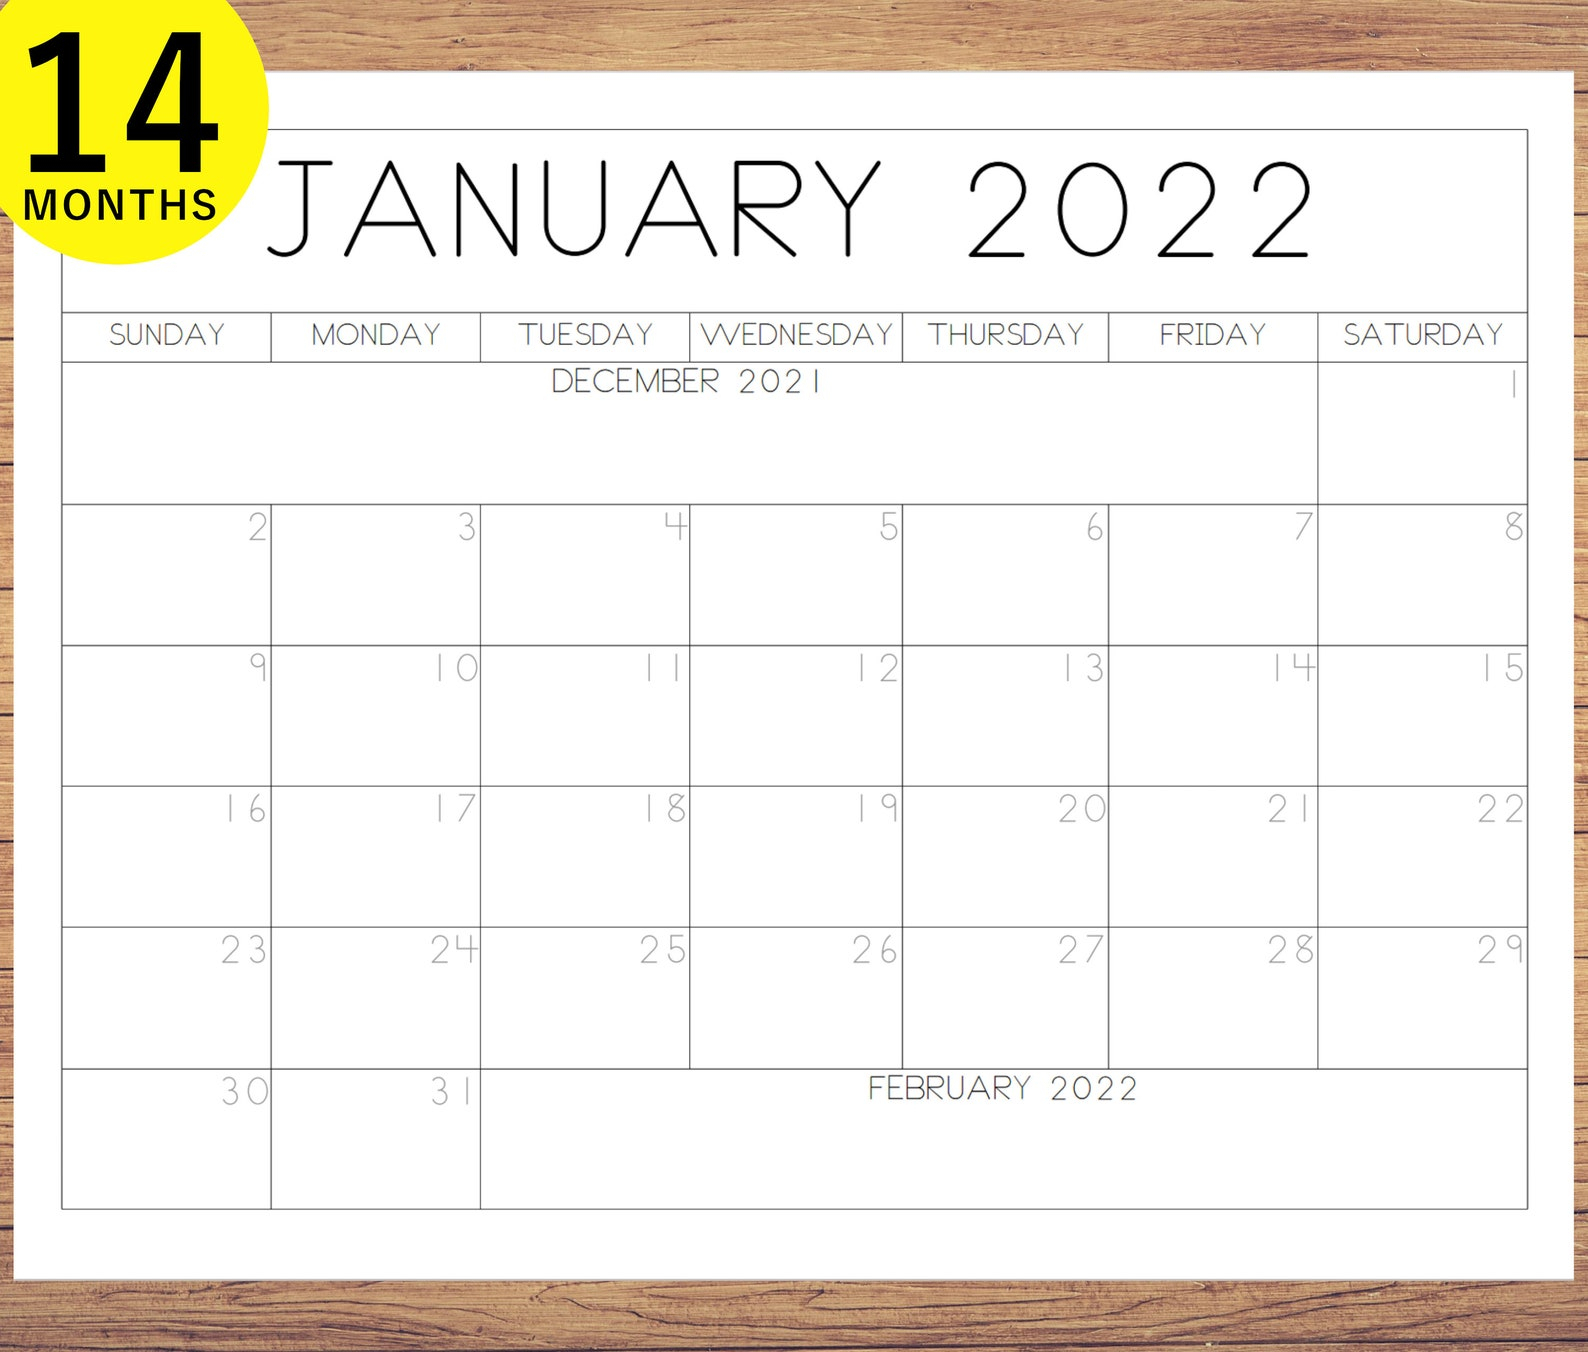 Catch July 30 2022 Calendar